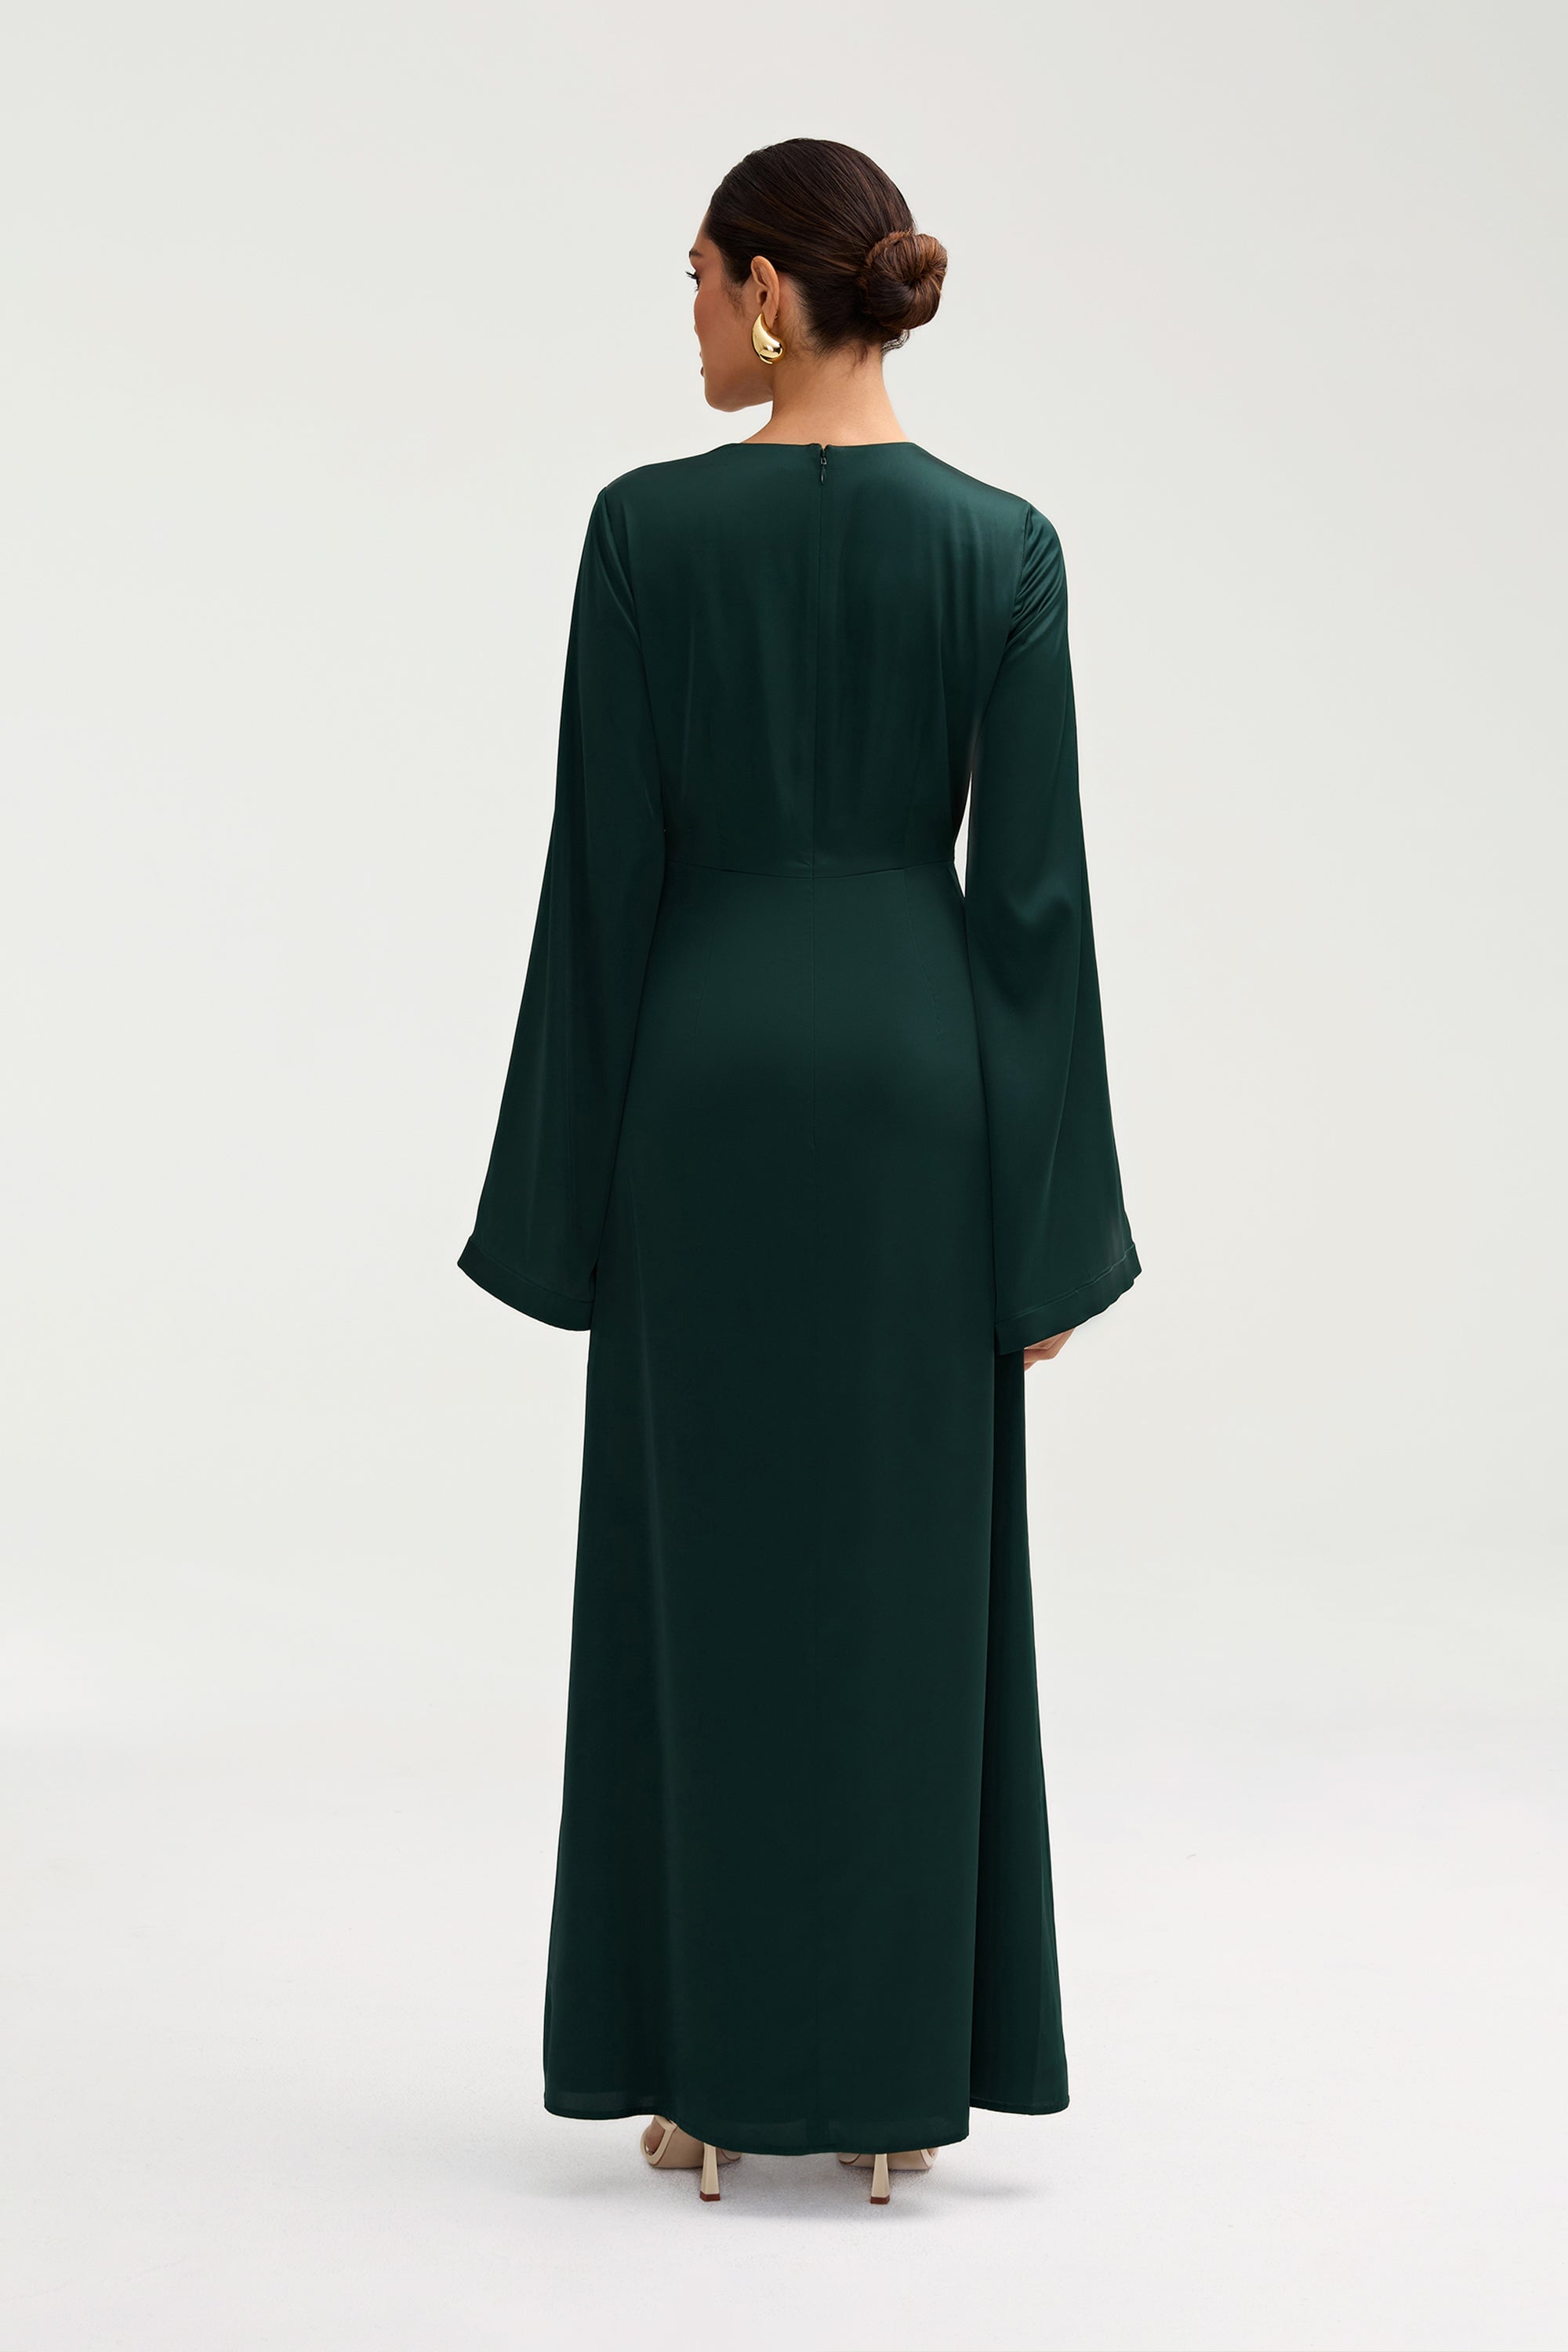 Duha Satin Twist Front Maxi Dress - Emerald Clothing epschoolboard 